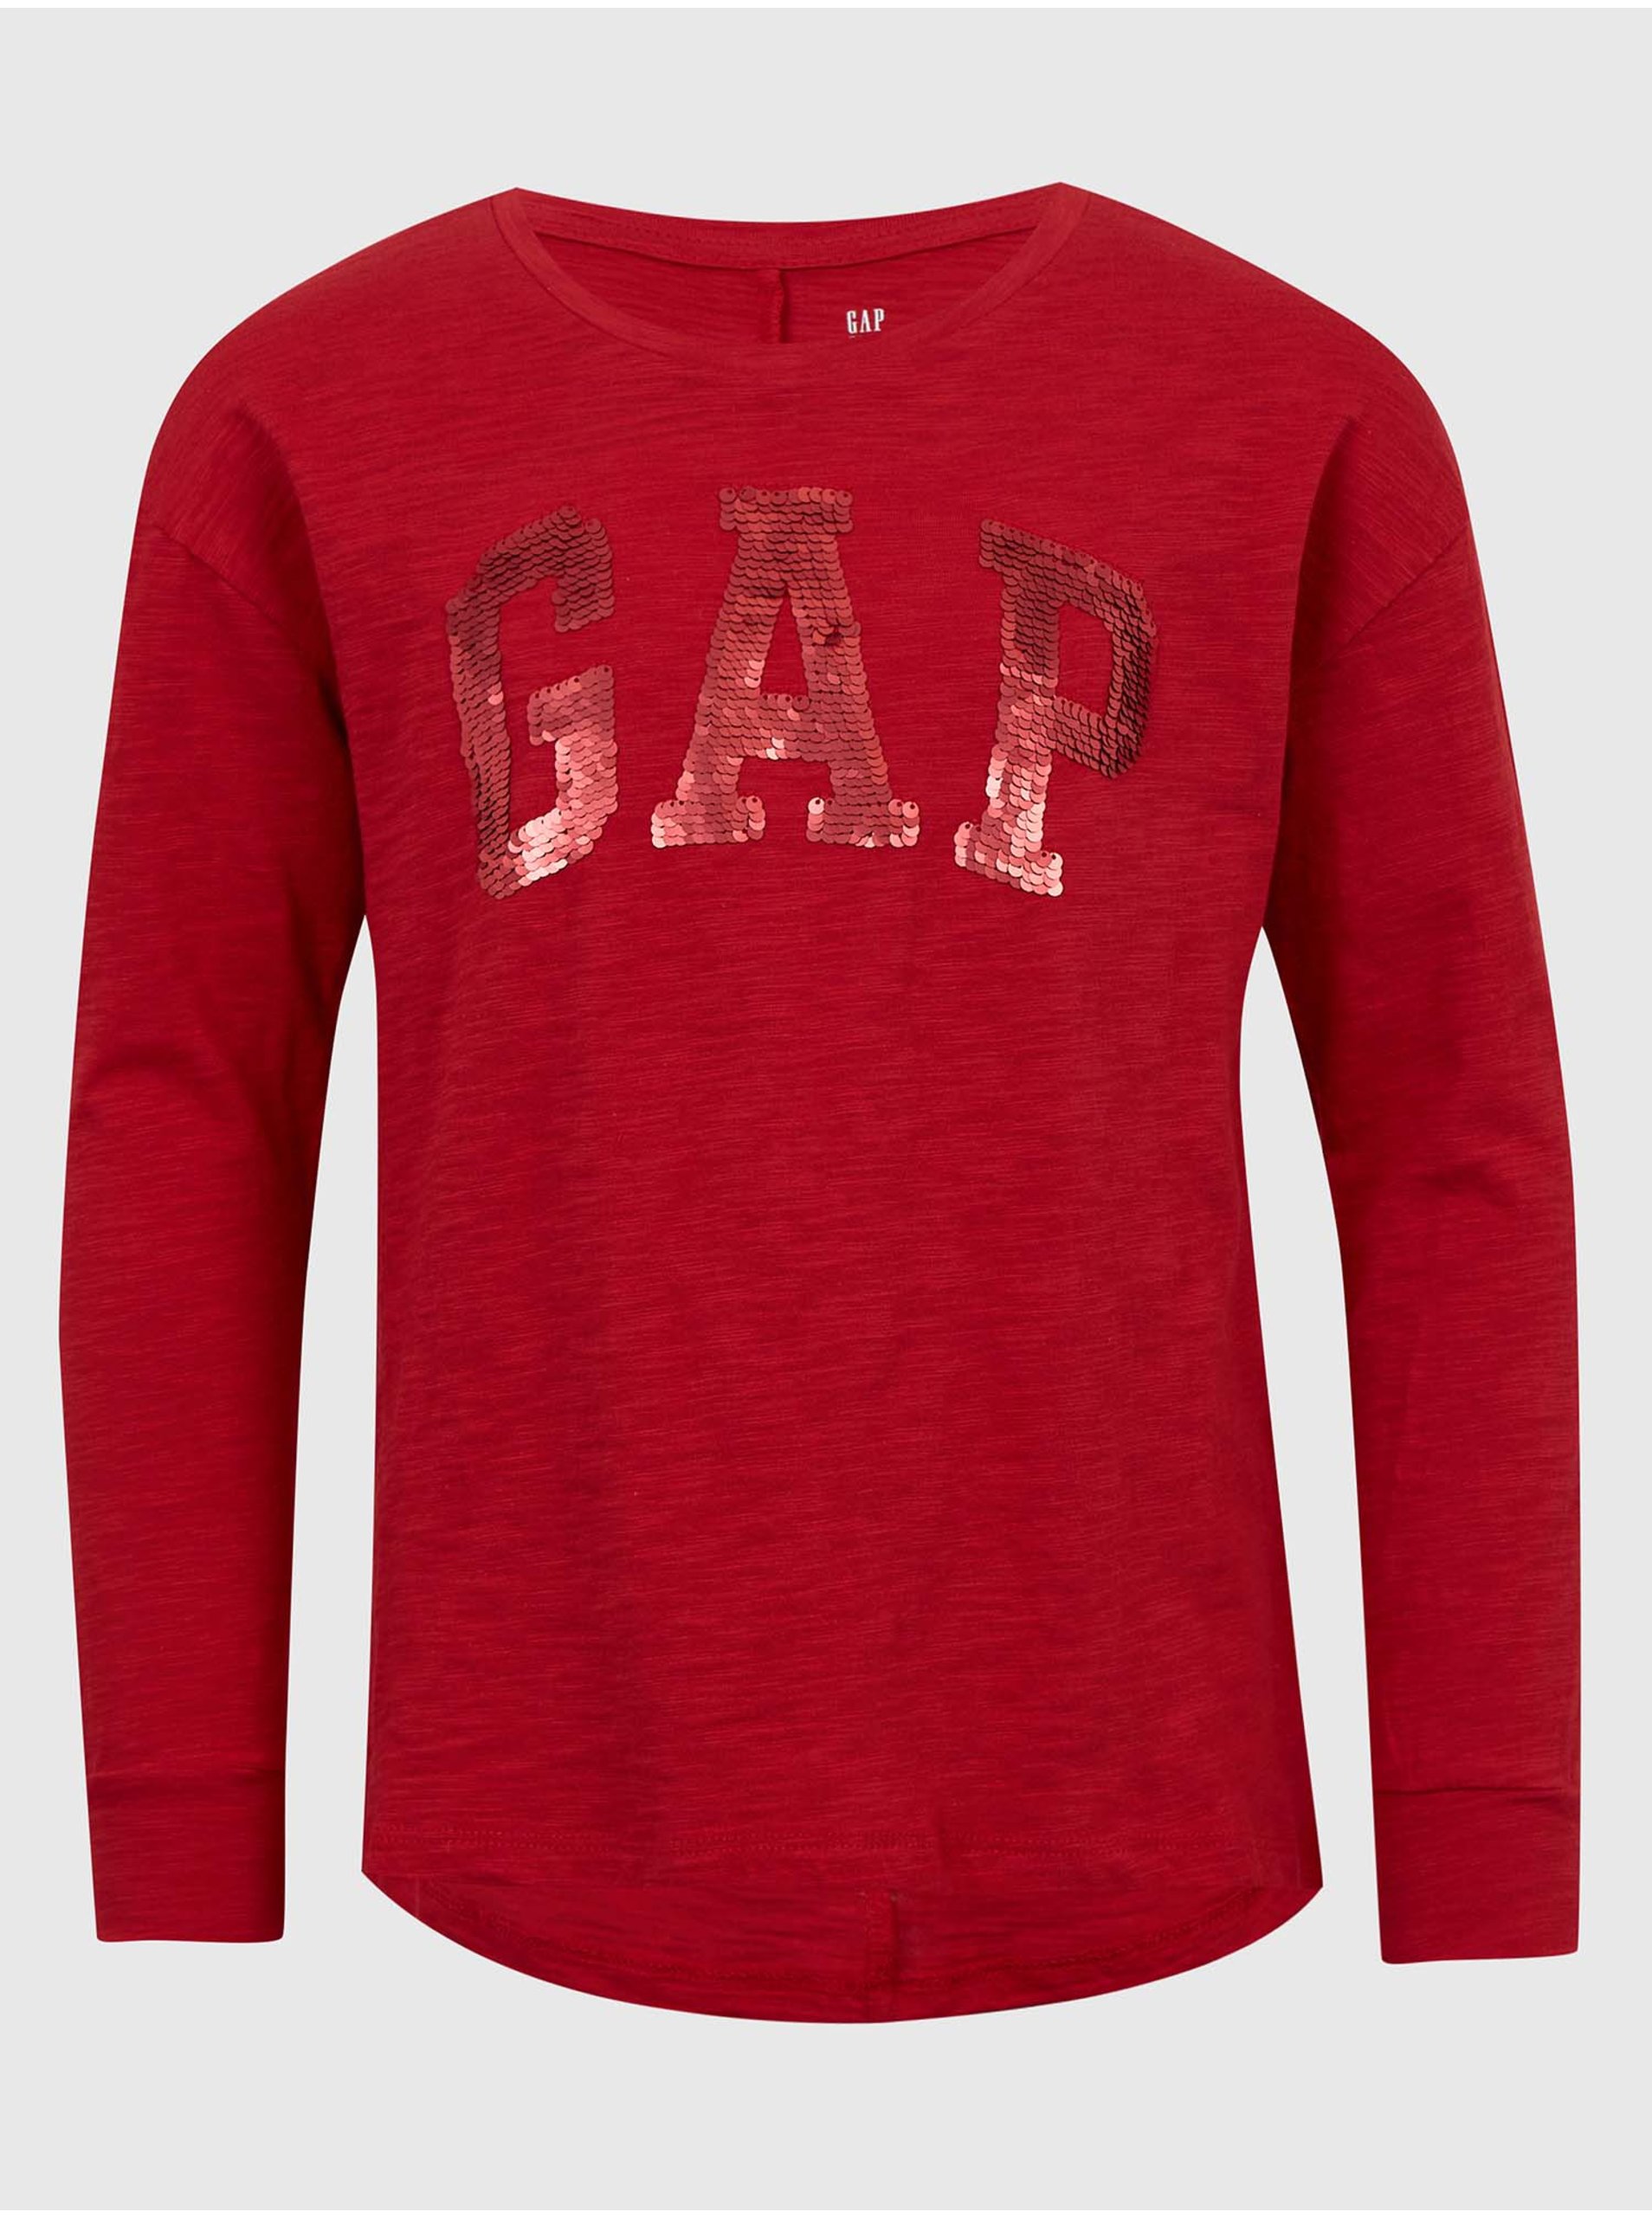 Lacno Červené dievčenské tričko logo GAP flitre